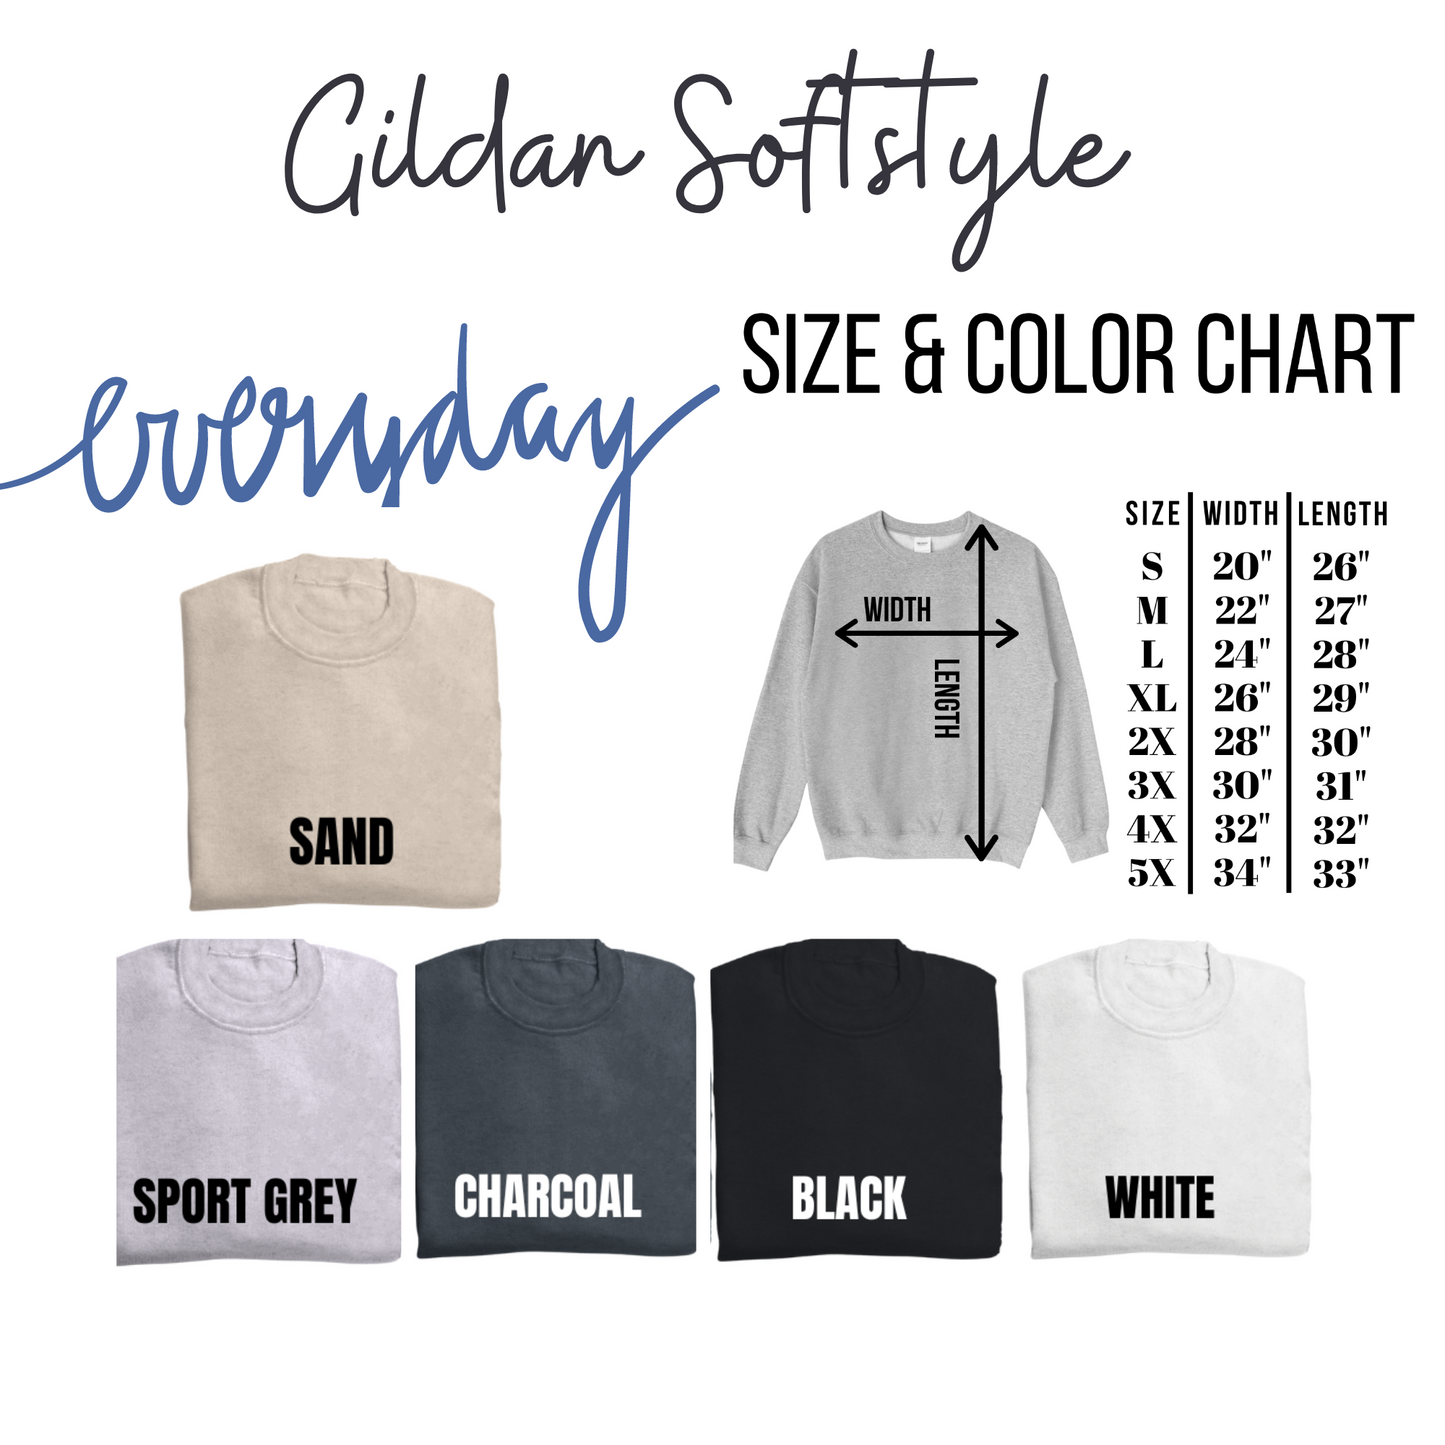 One Lucky Nurse Gildan Softstyle Tshirt or Sweatshirt